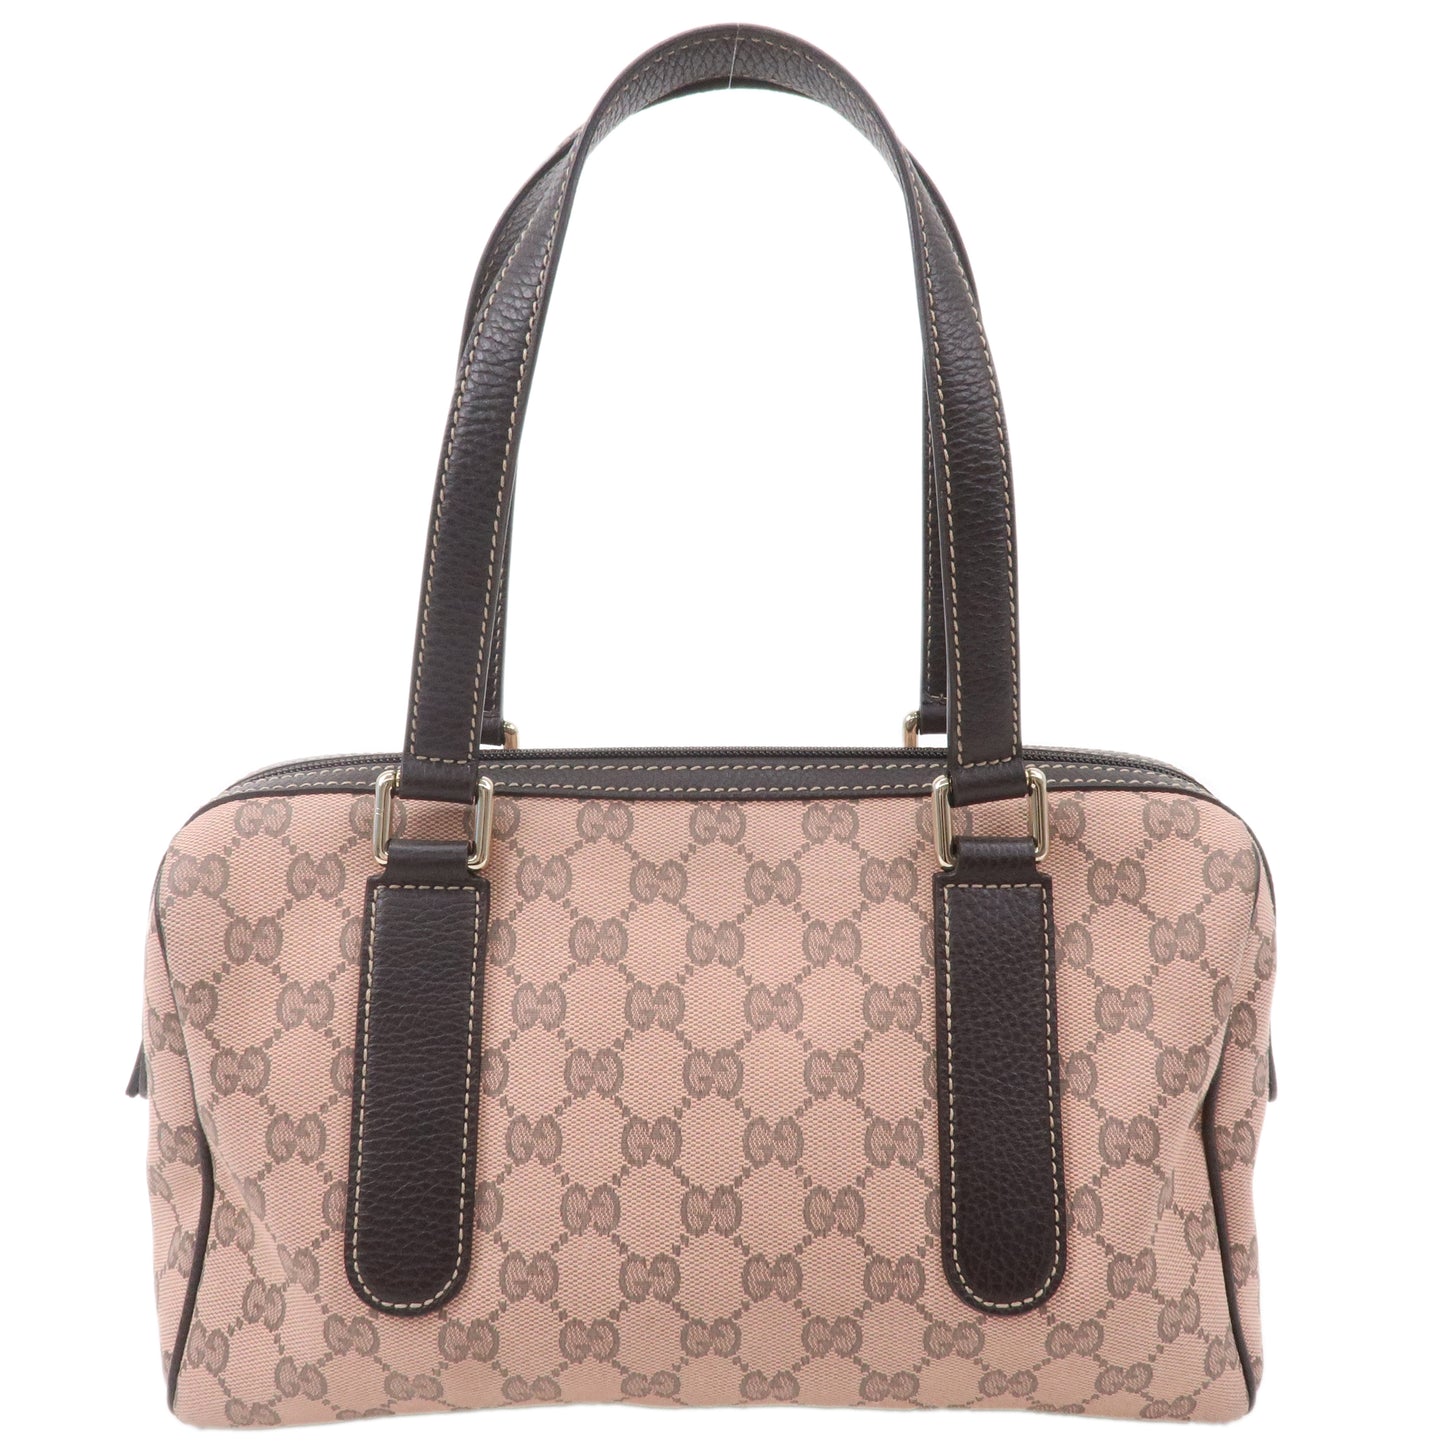 GUCCI-GG-Canvas-Leather-Boston-Bag-Hand-Bag-Pink-Dark-Brown-257289